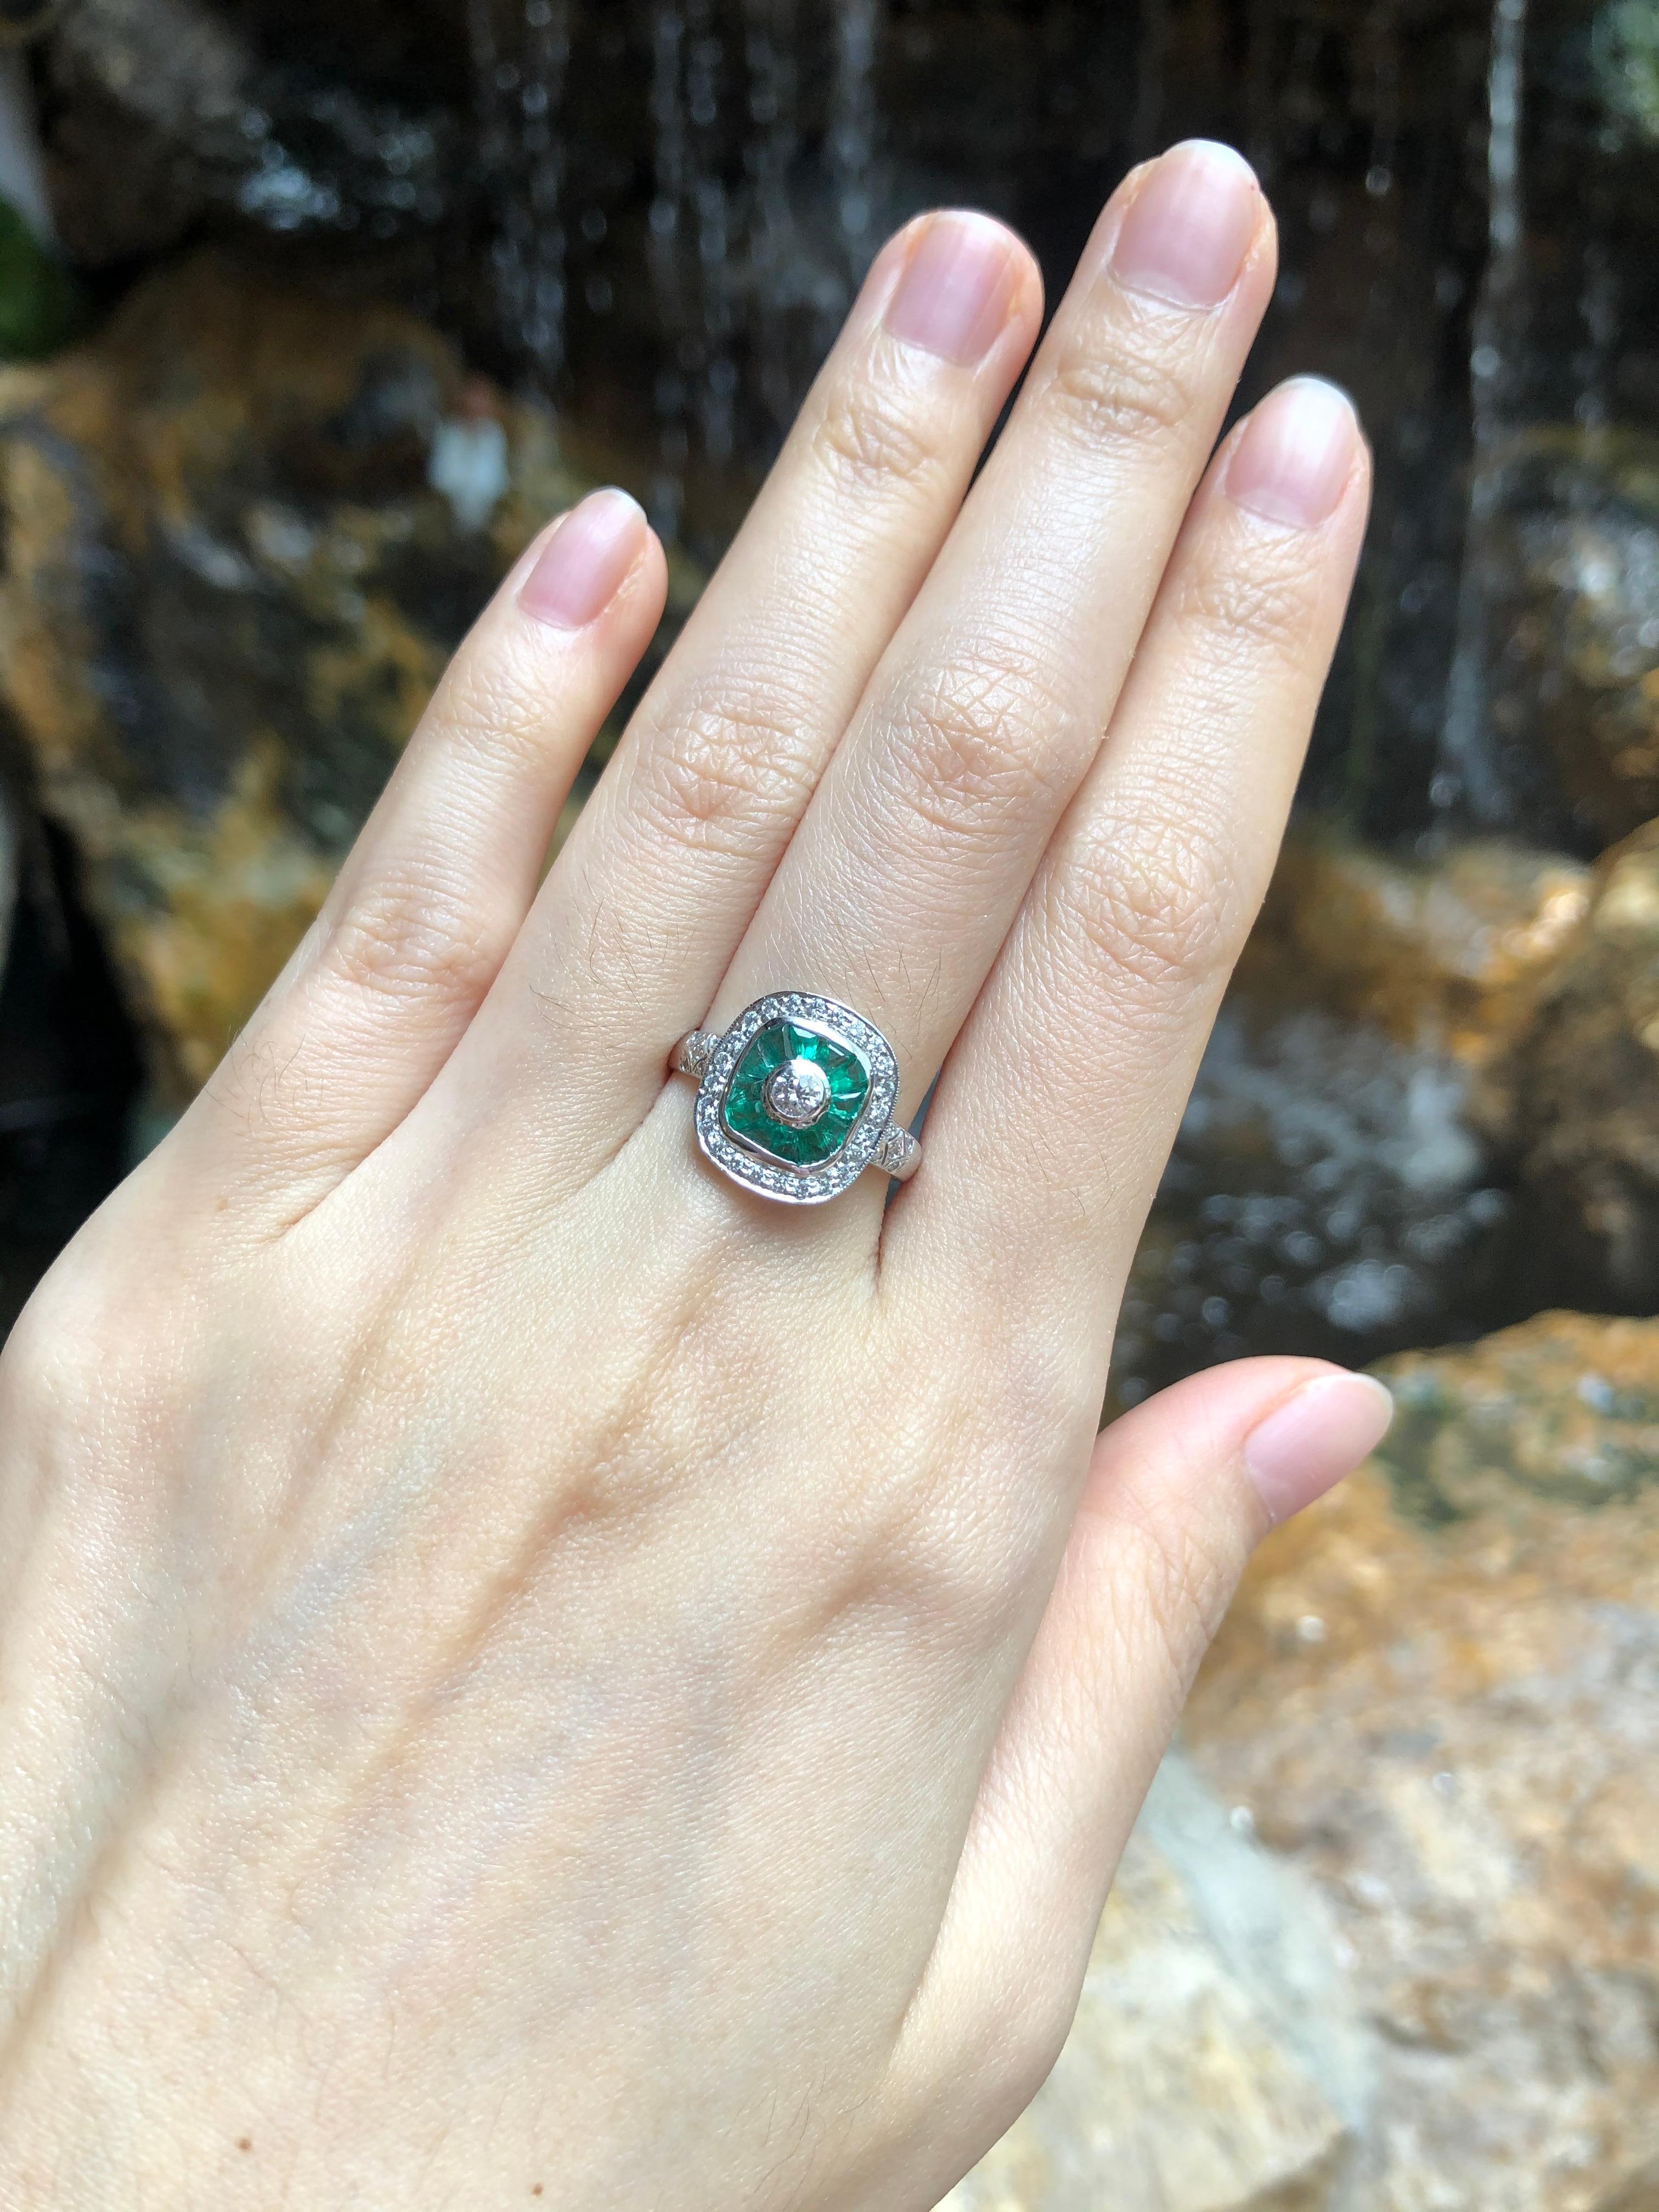 Emerald 0.70 carat with Diamond 0.37 carat Ring set in 18 Karat White Gold Settings

Width:  1.2 cm 
Length: 1.3 cm
Ring Size: 54
Total Weight: 3.14 grams

